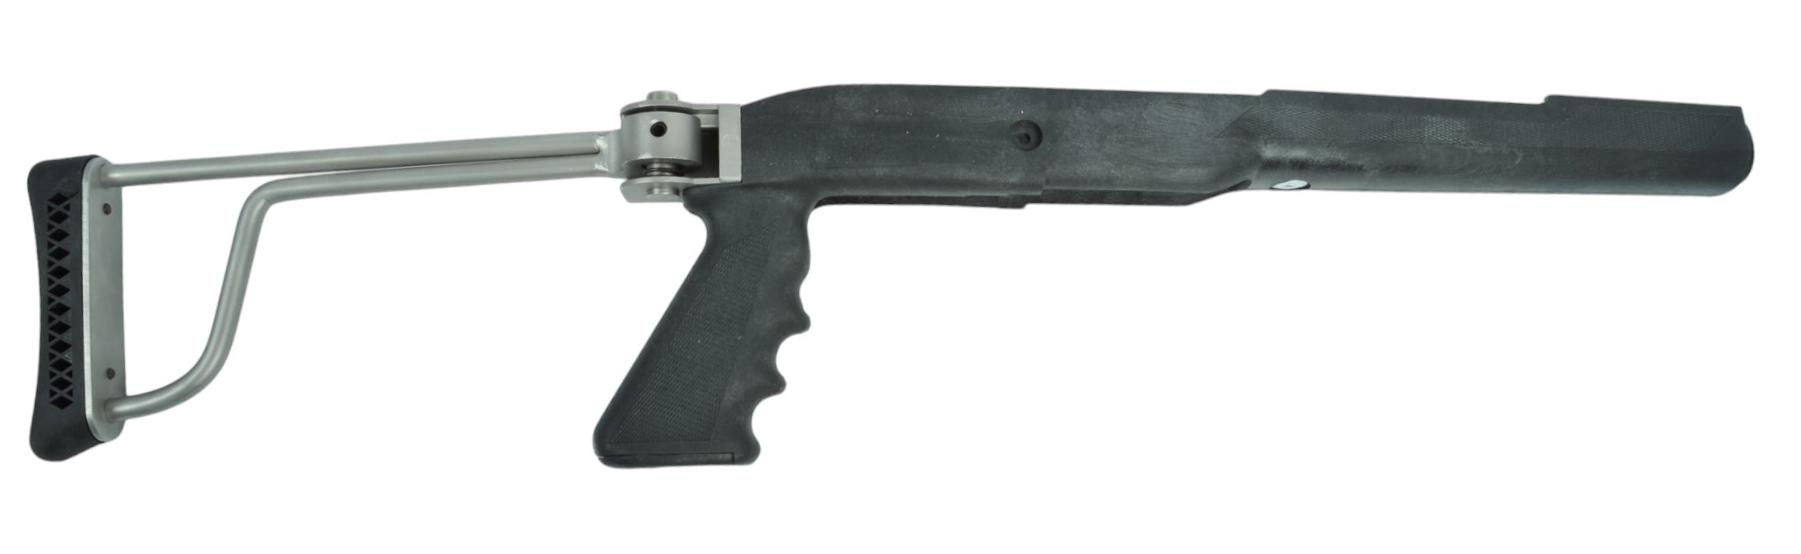 Ruger Mini-14 Folding Stock (MGX)